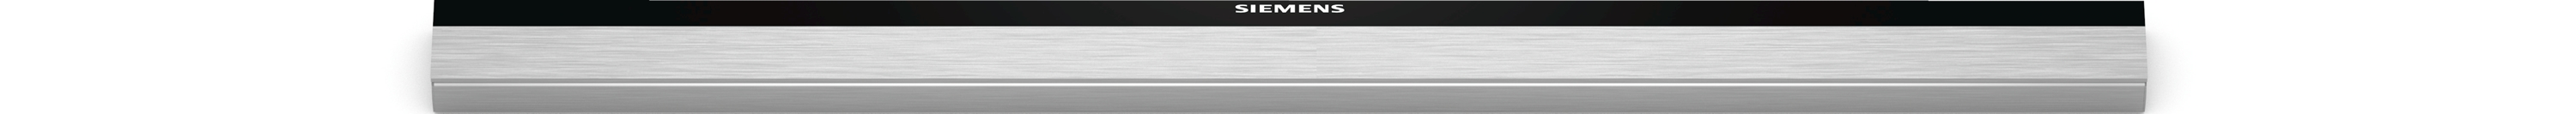 Siemens LZ46850 Dekorační lišta